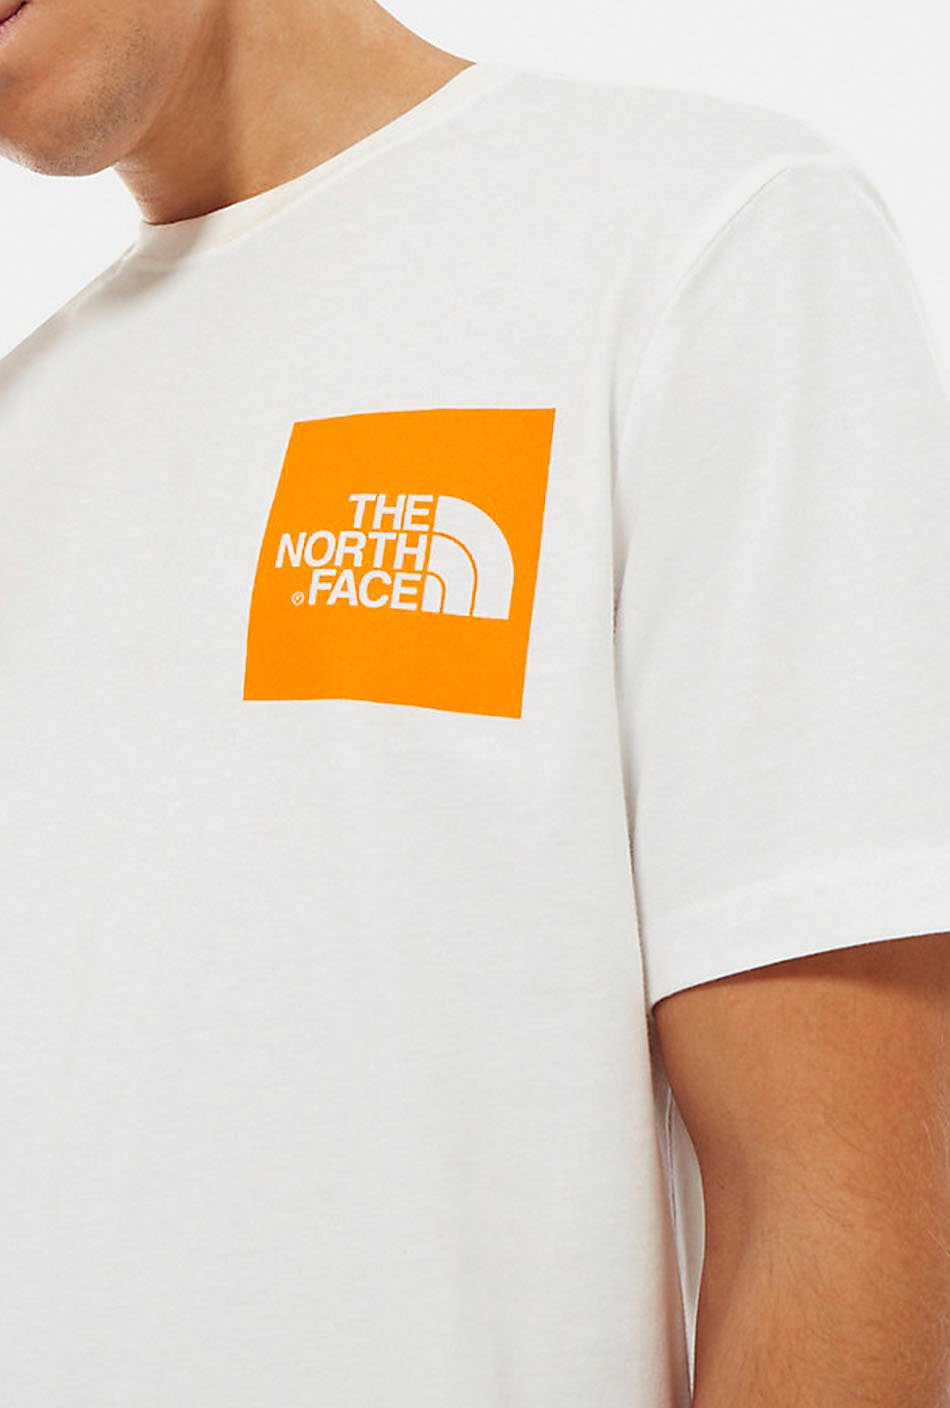 The North Face Fine T-Shirt White/Flame Orange